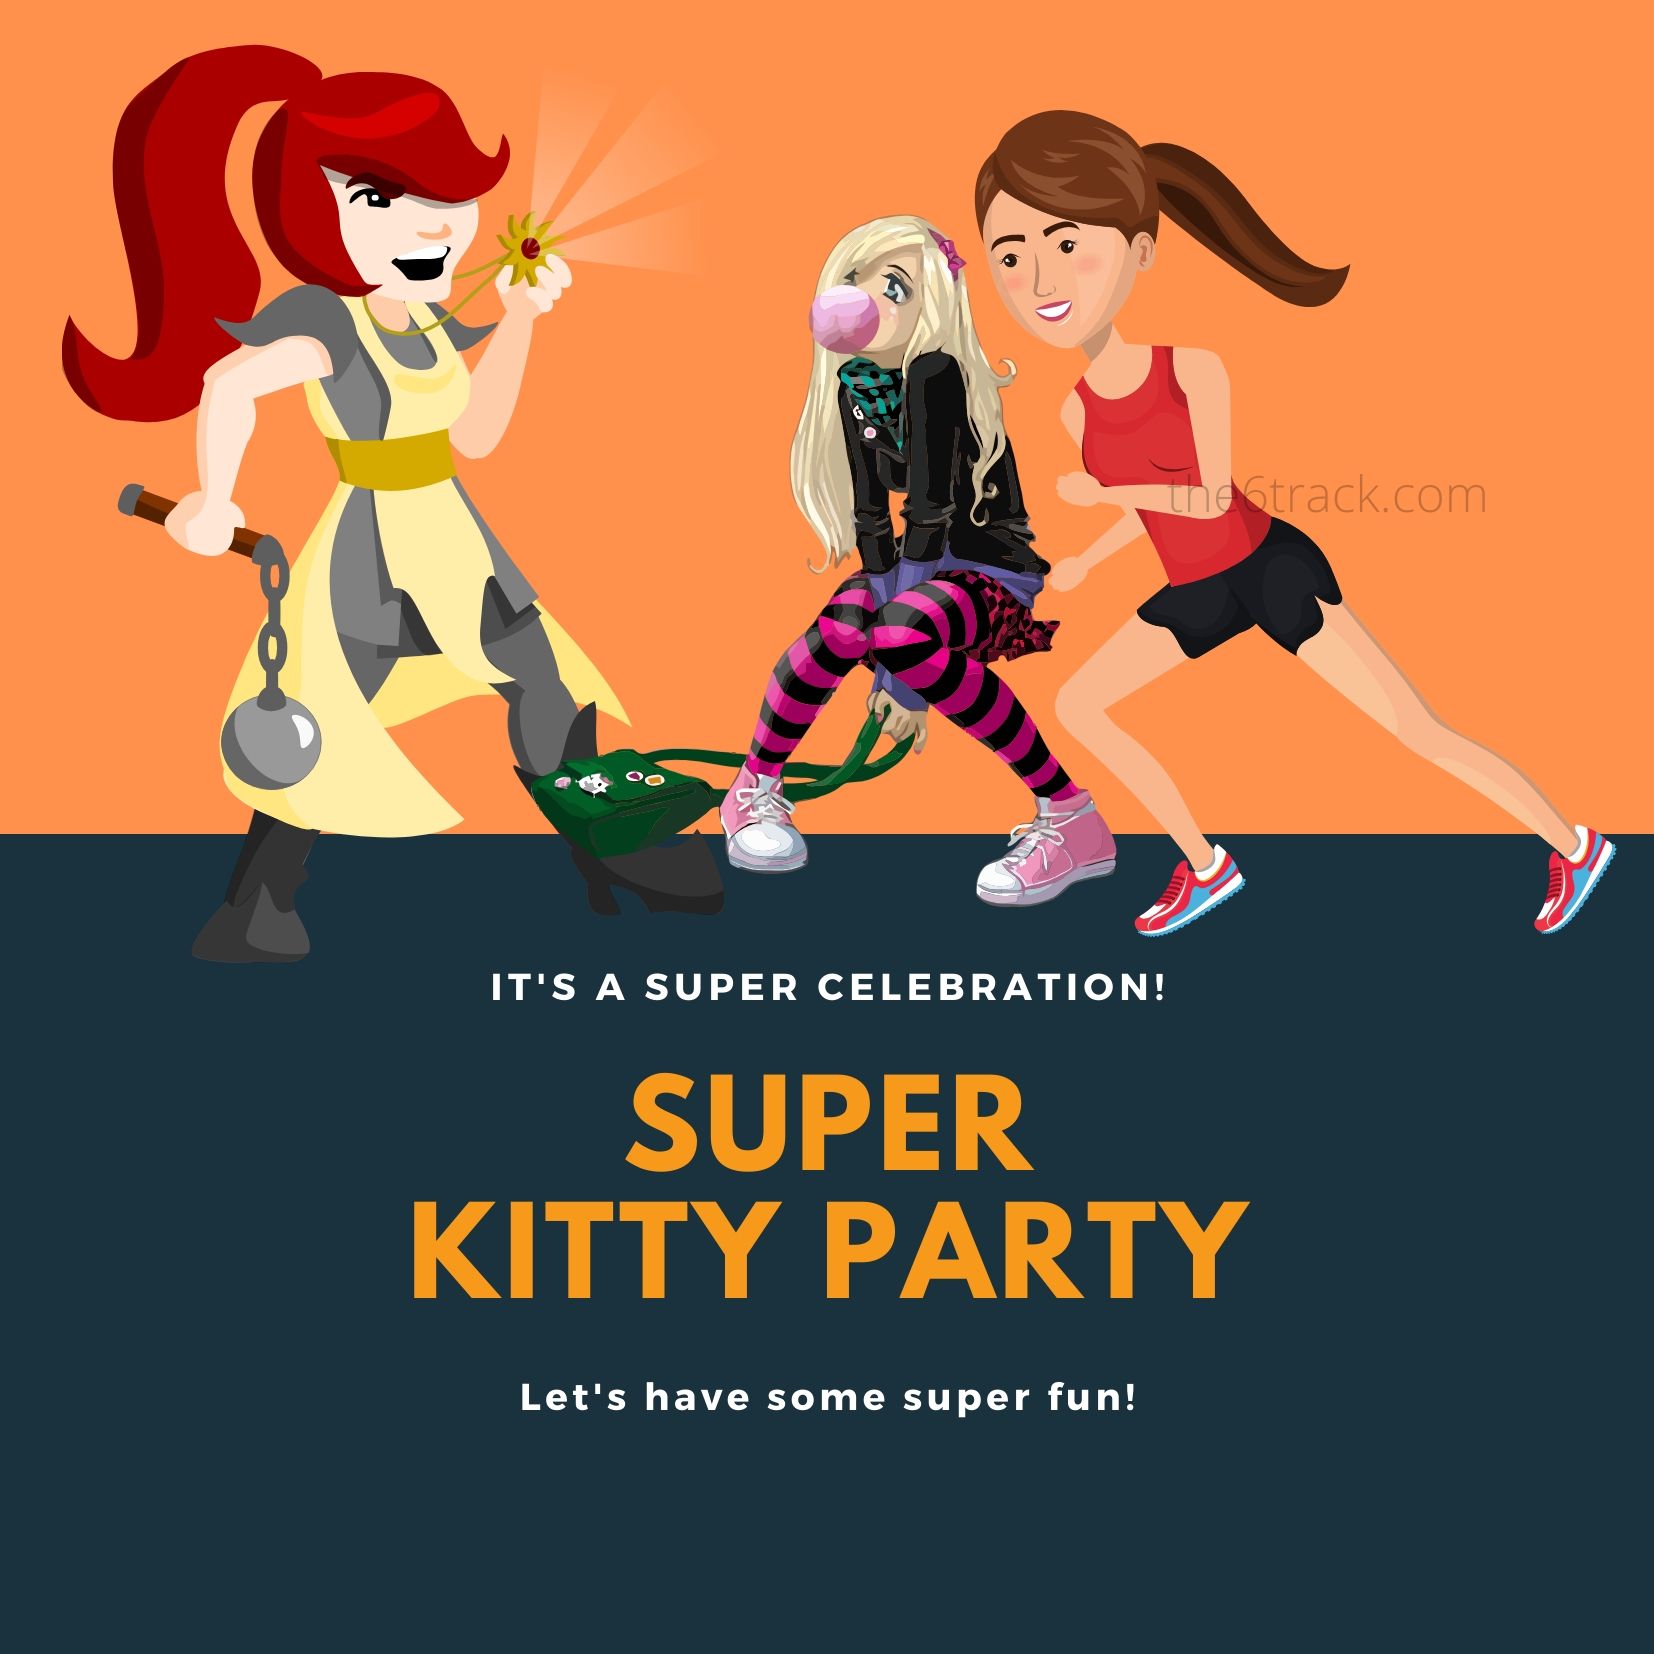 childhood-theme-kitty-party-invitation-kitty-party-themes-kitty